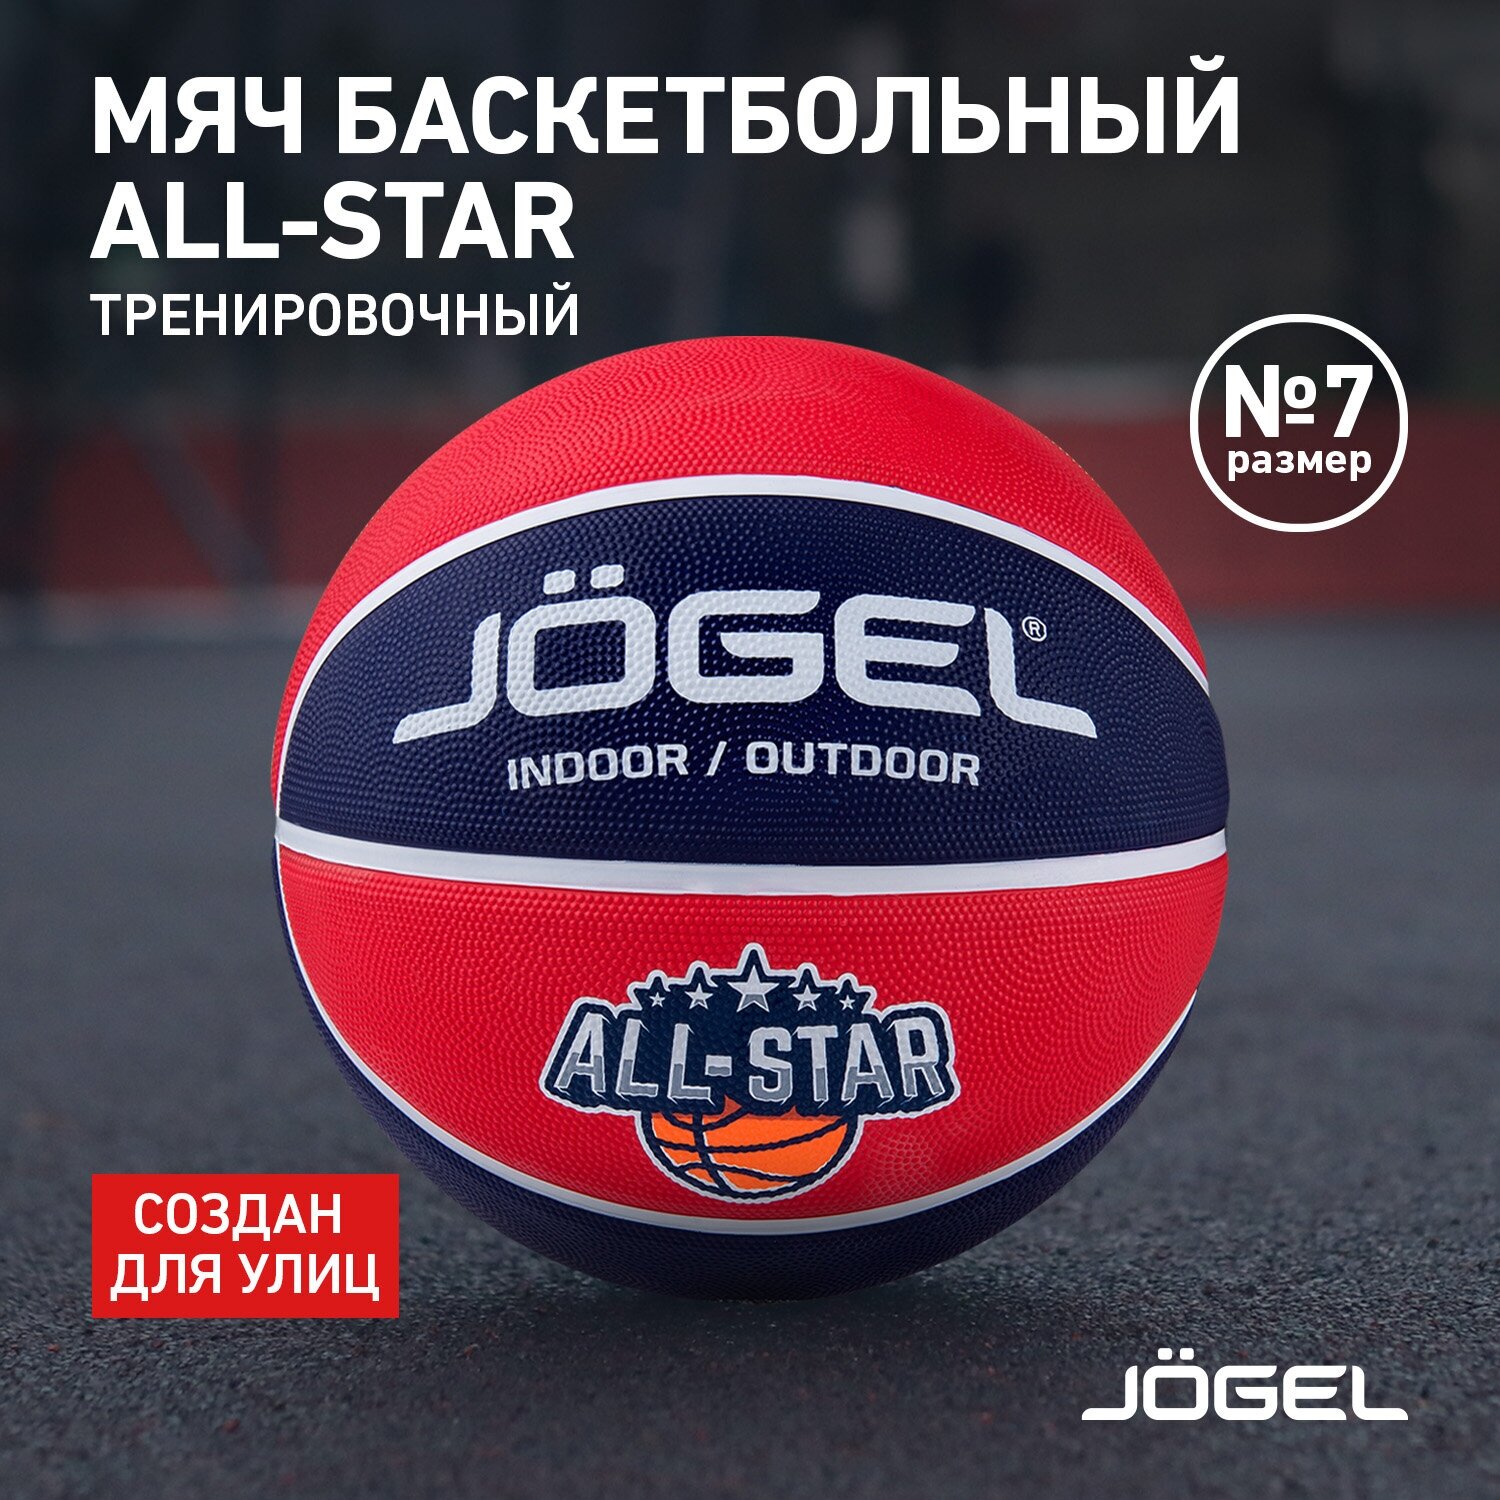 Баскетбольный мяч Jogel Streets All-Star №6